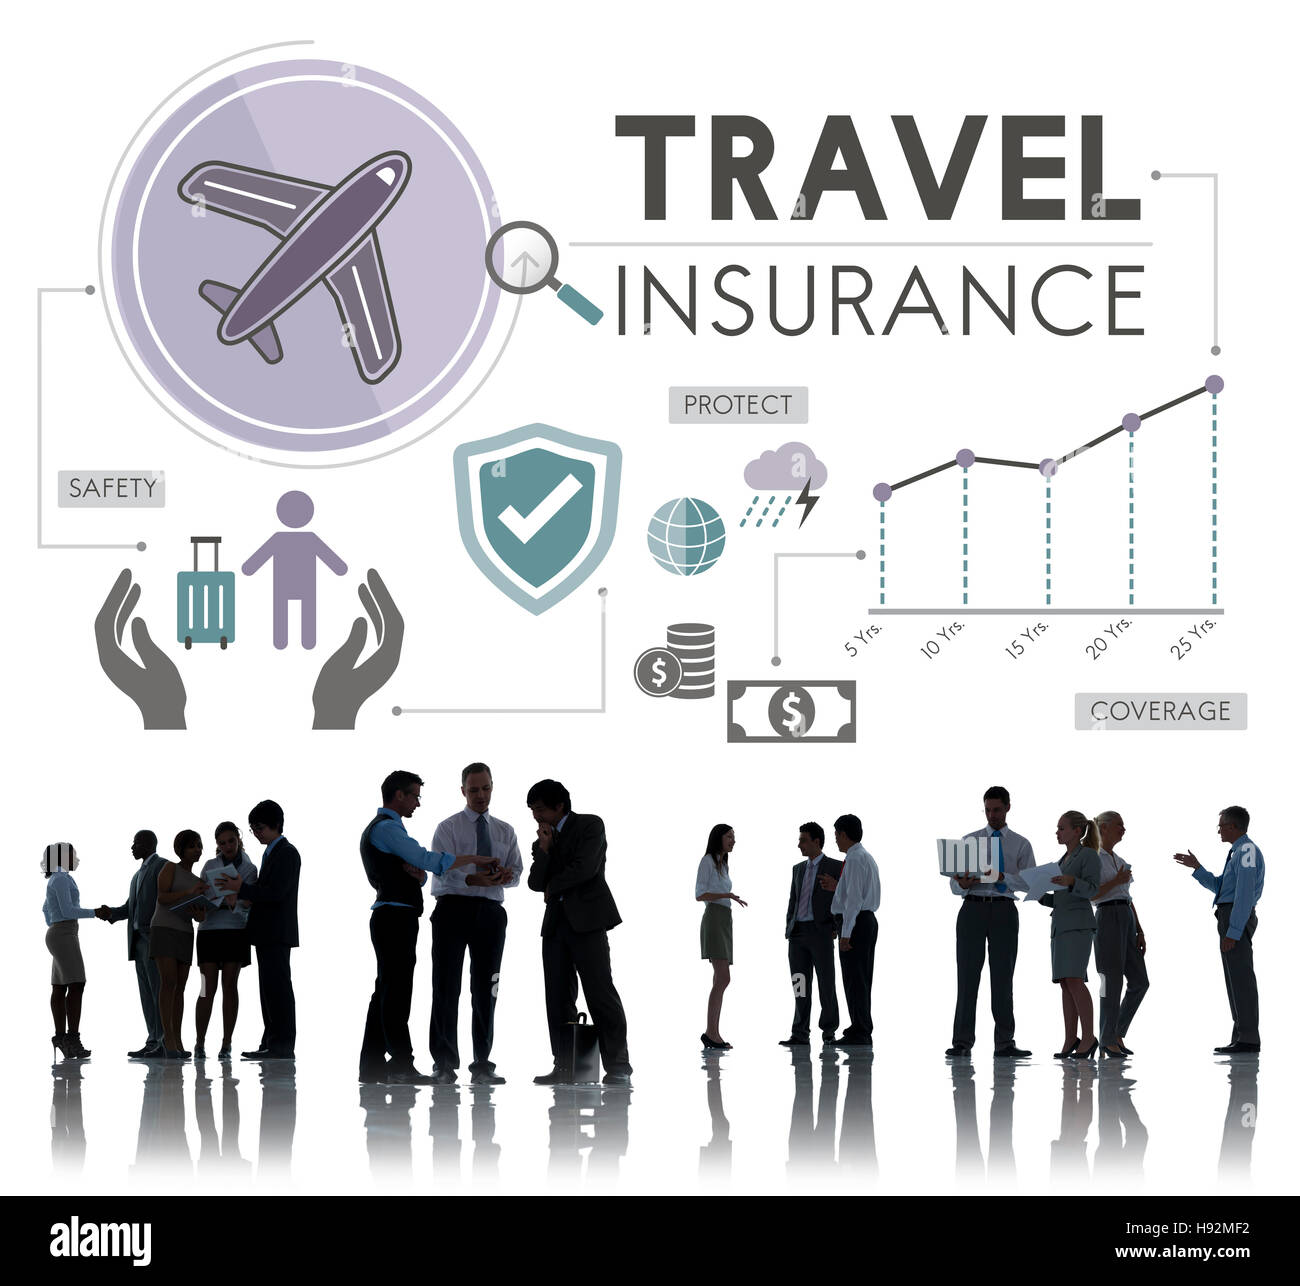 Travel Insurance Destination Tourism Vacation Concept Stock Photo